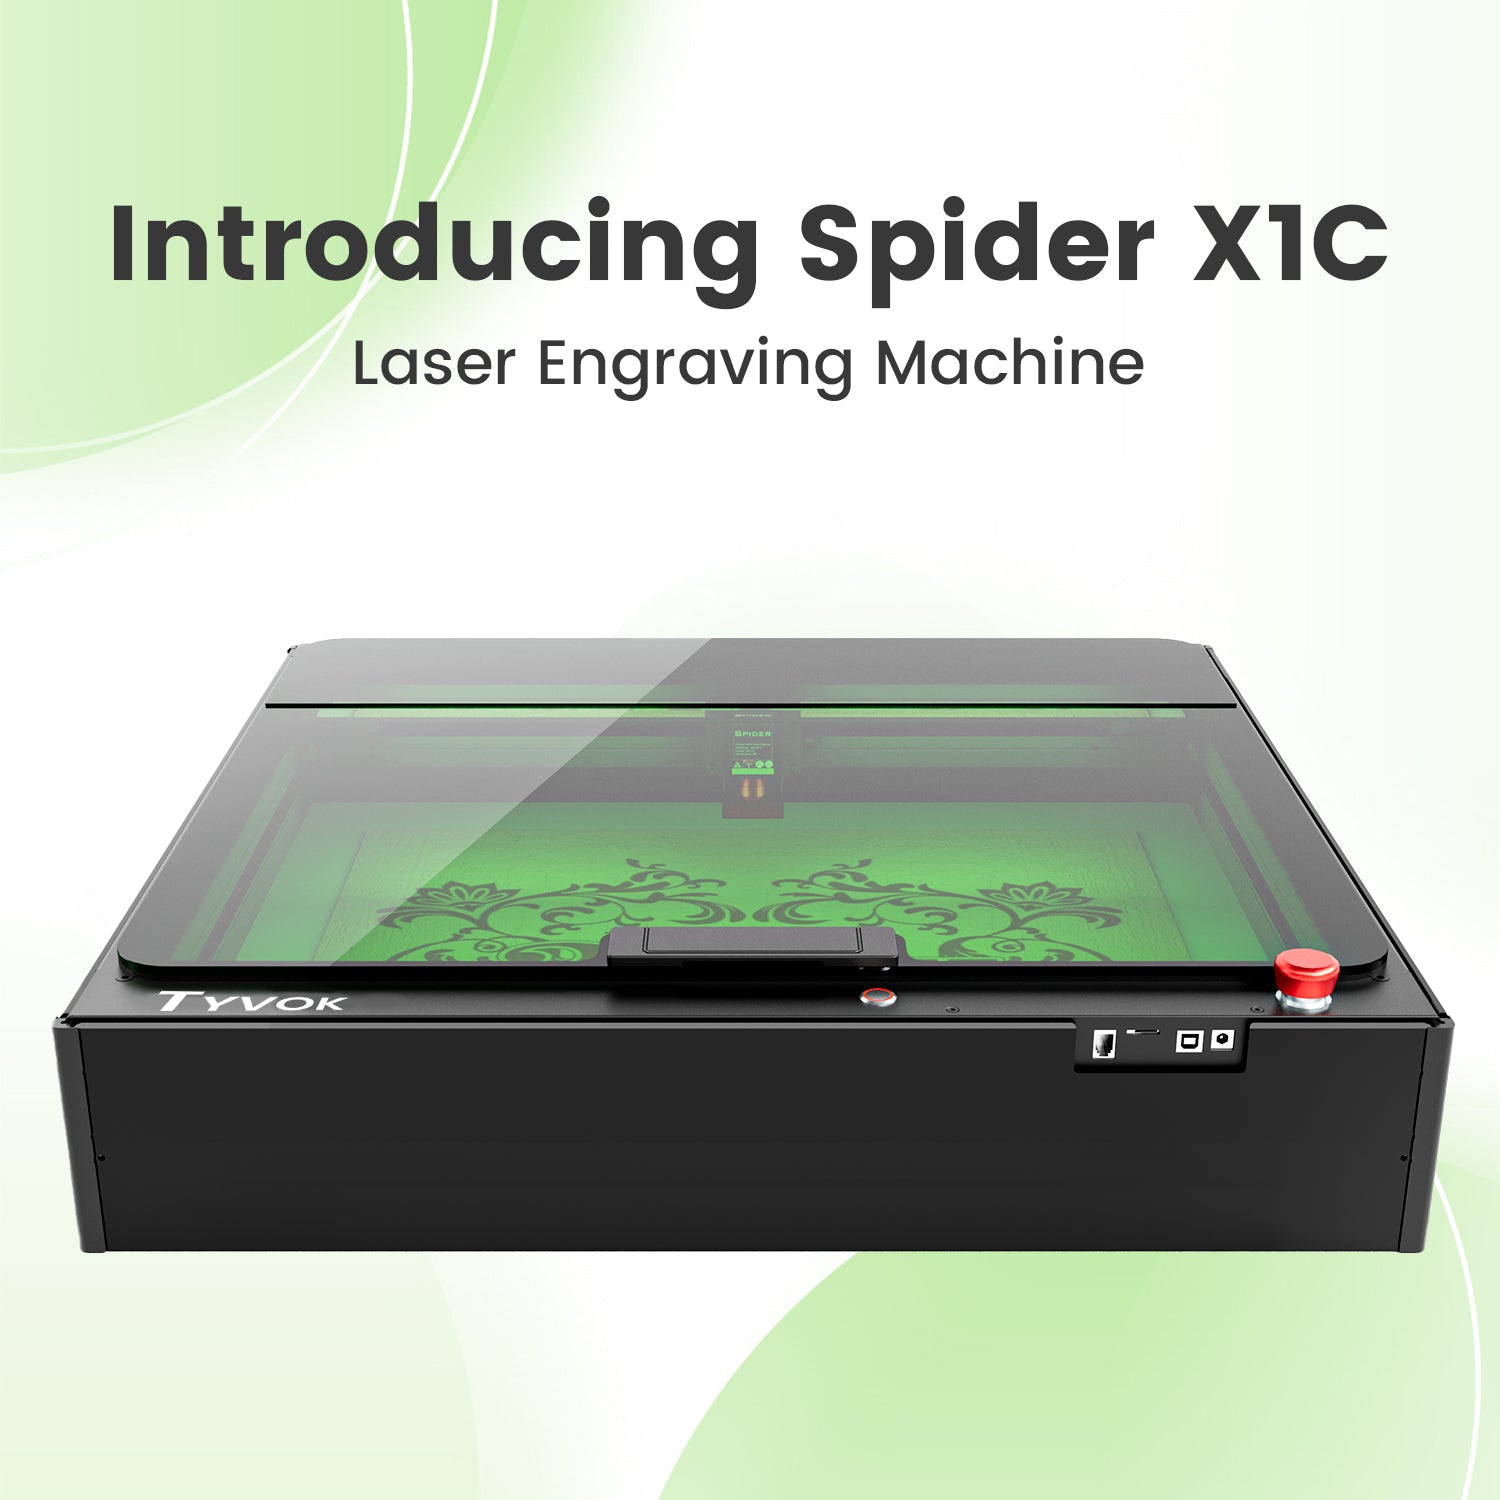 Spider X1C Laser Engraving Machine: Unleashing Creativity with Precision